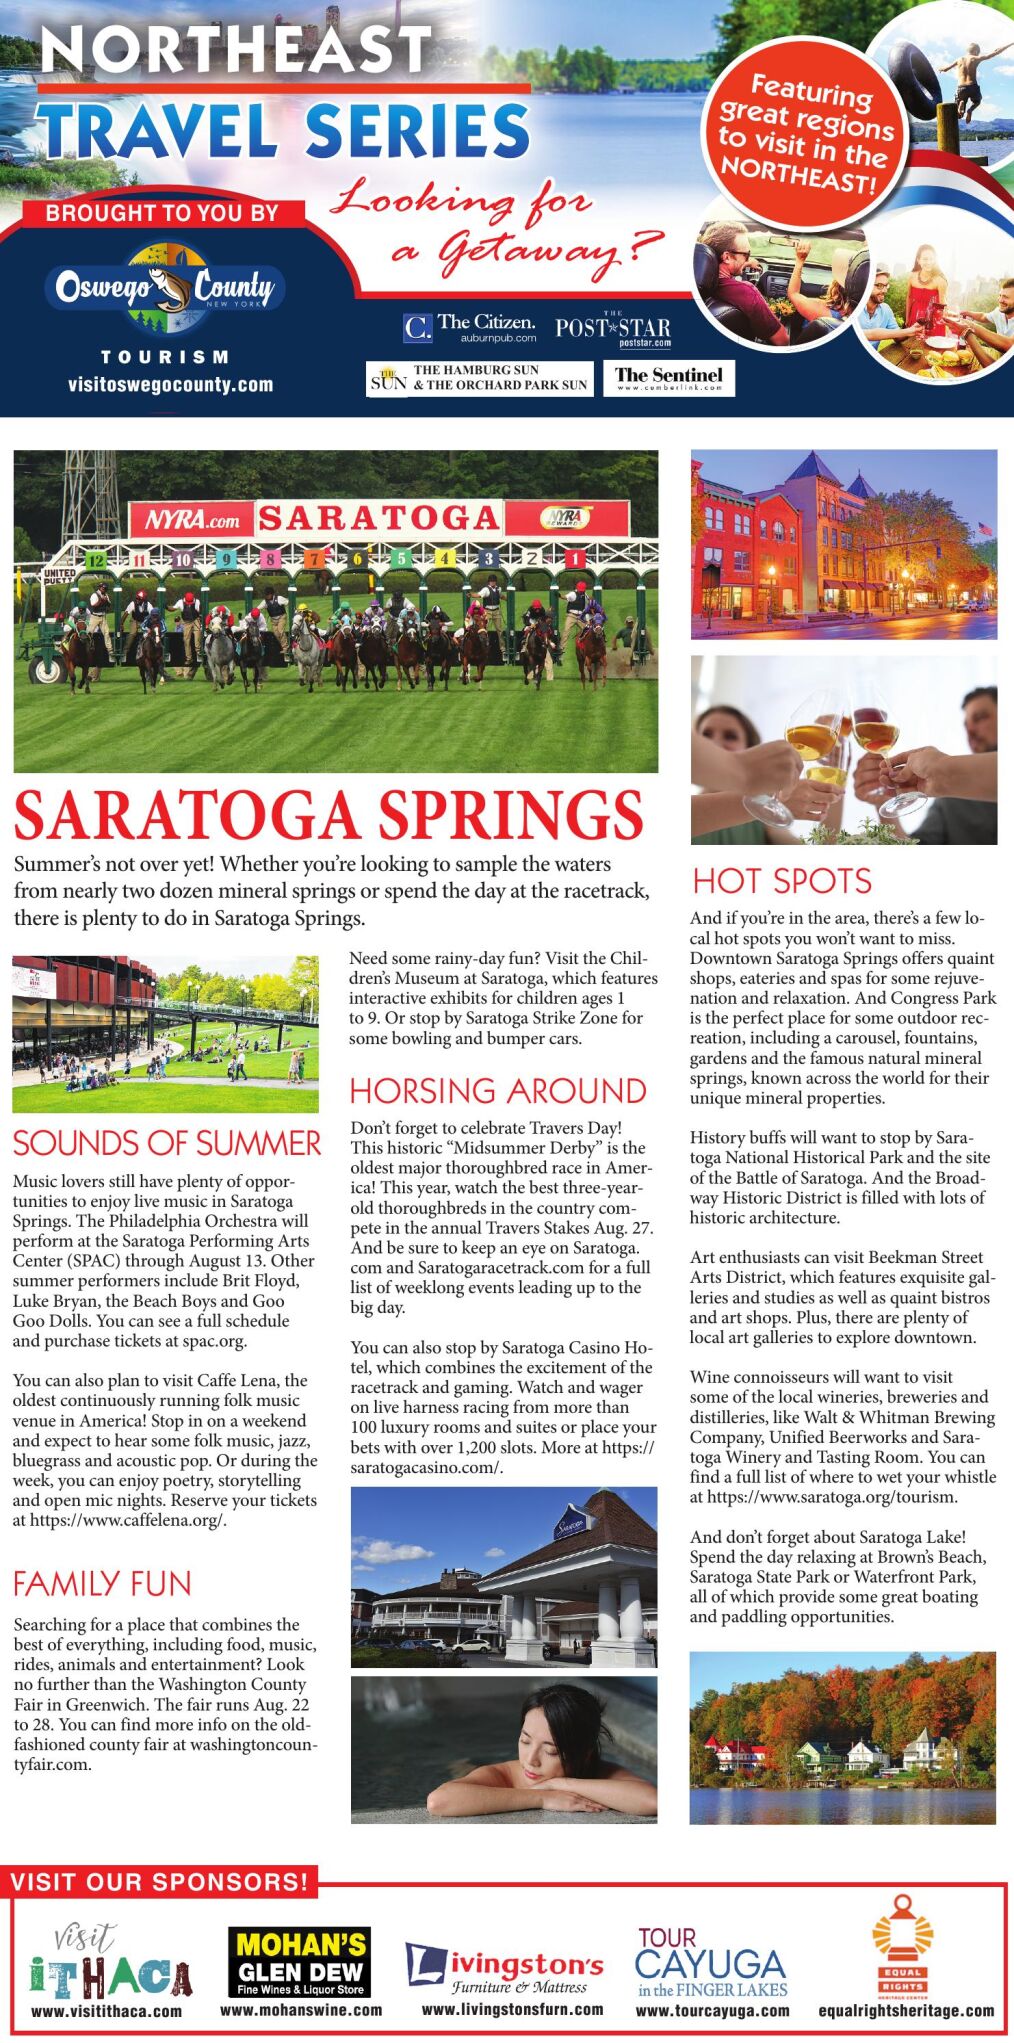 Northeast Travel Series: Saratoga Springs